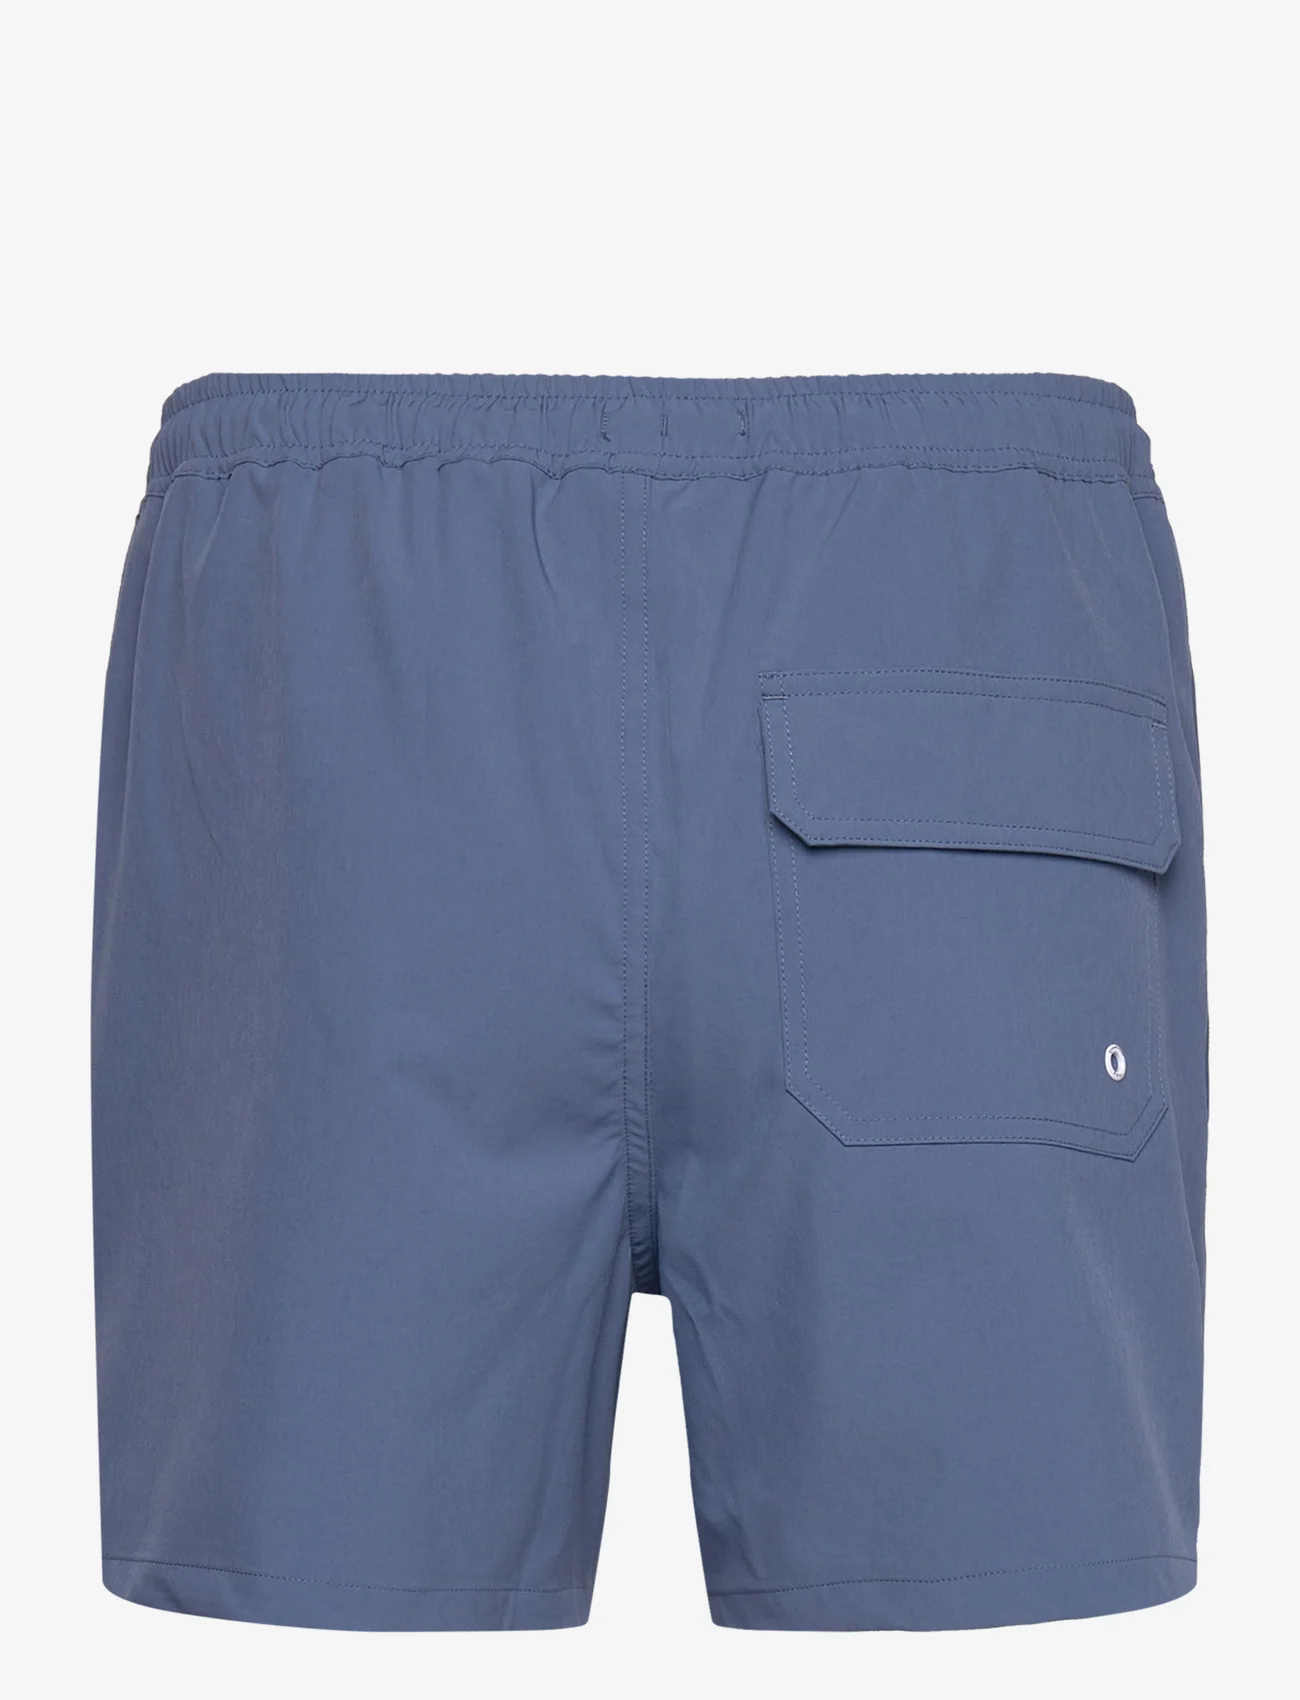 Knowledge Cotton Apparel - Stretch swimshorts - GRS/Vegan - shorts - moonlight blue - 1